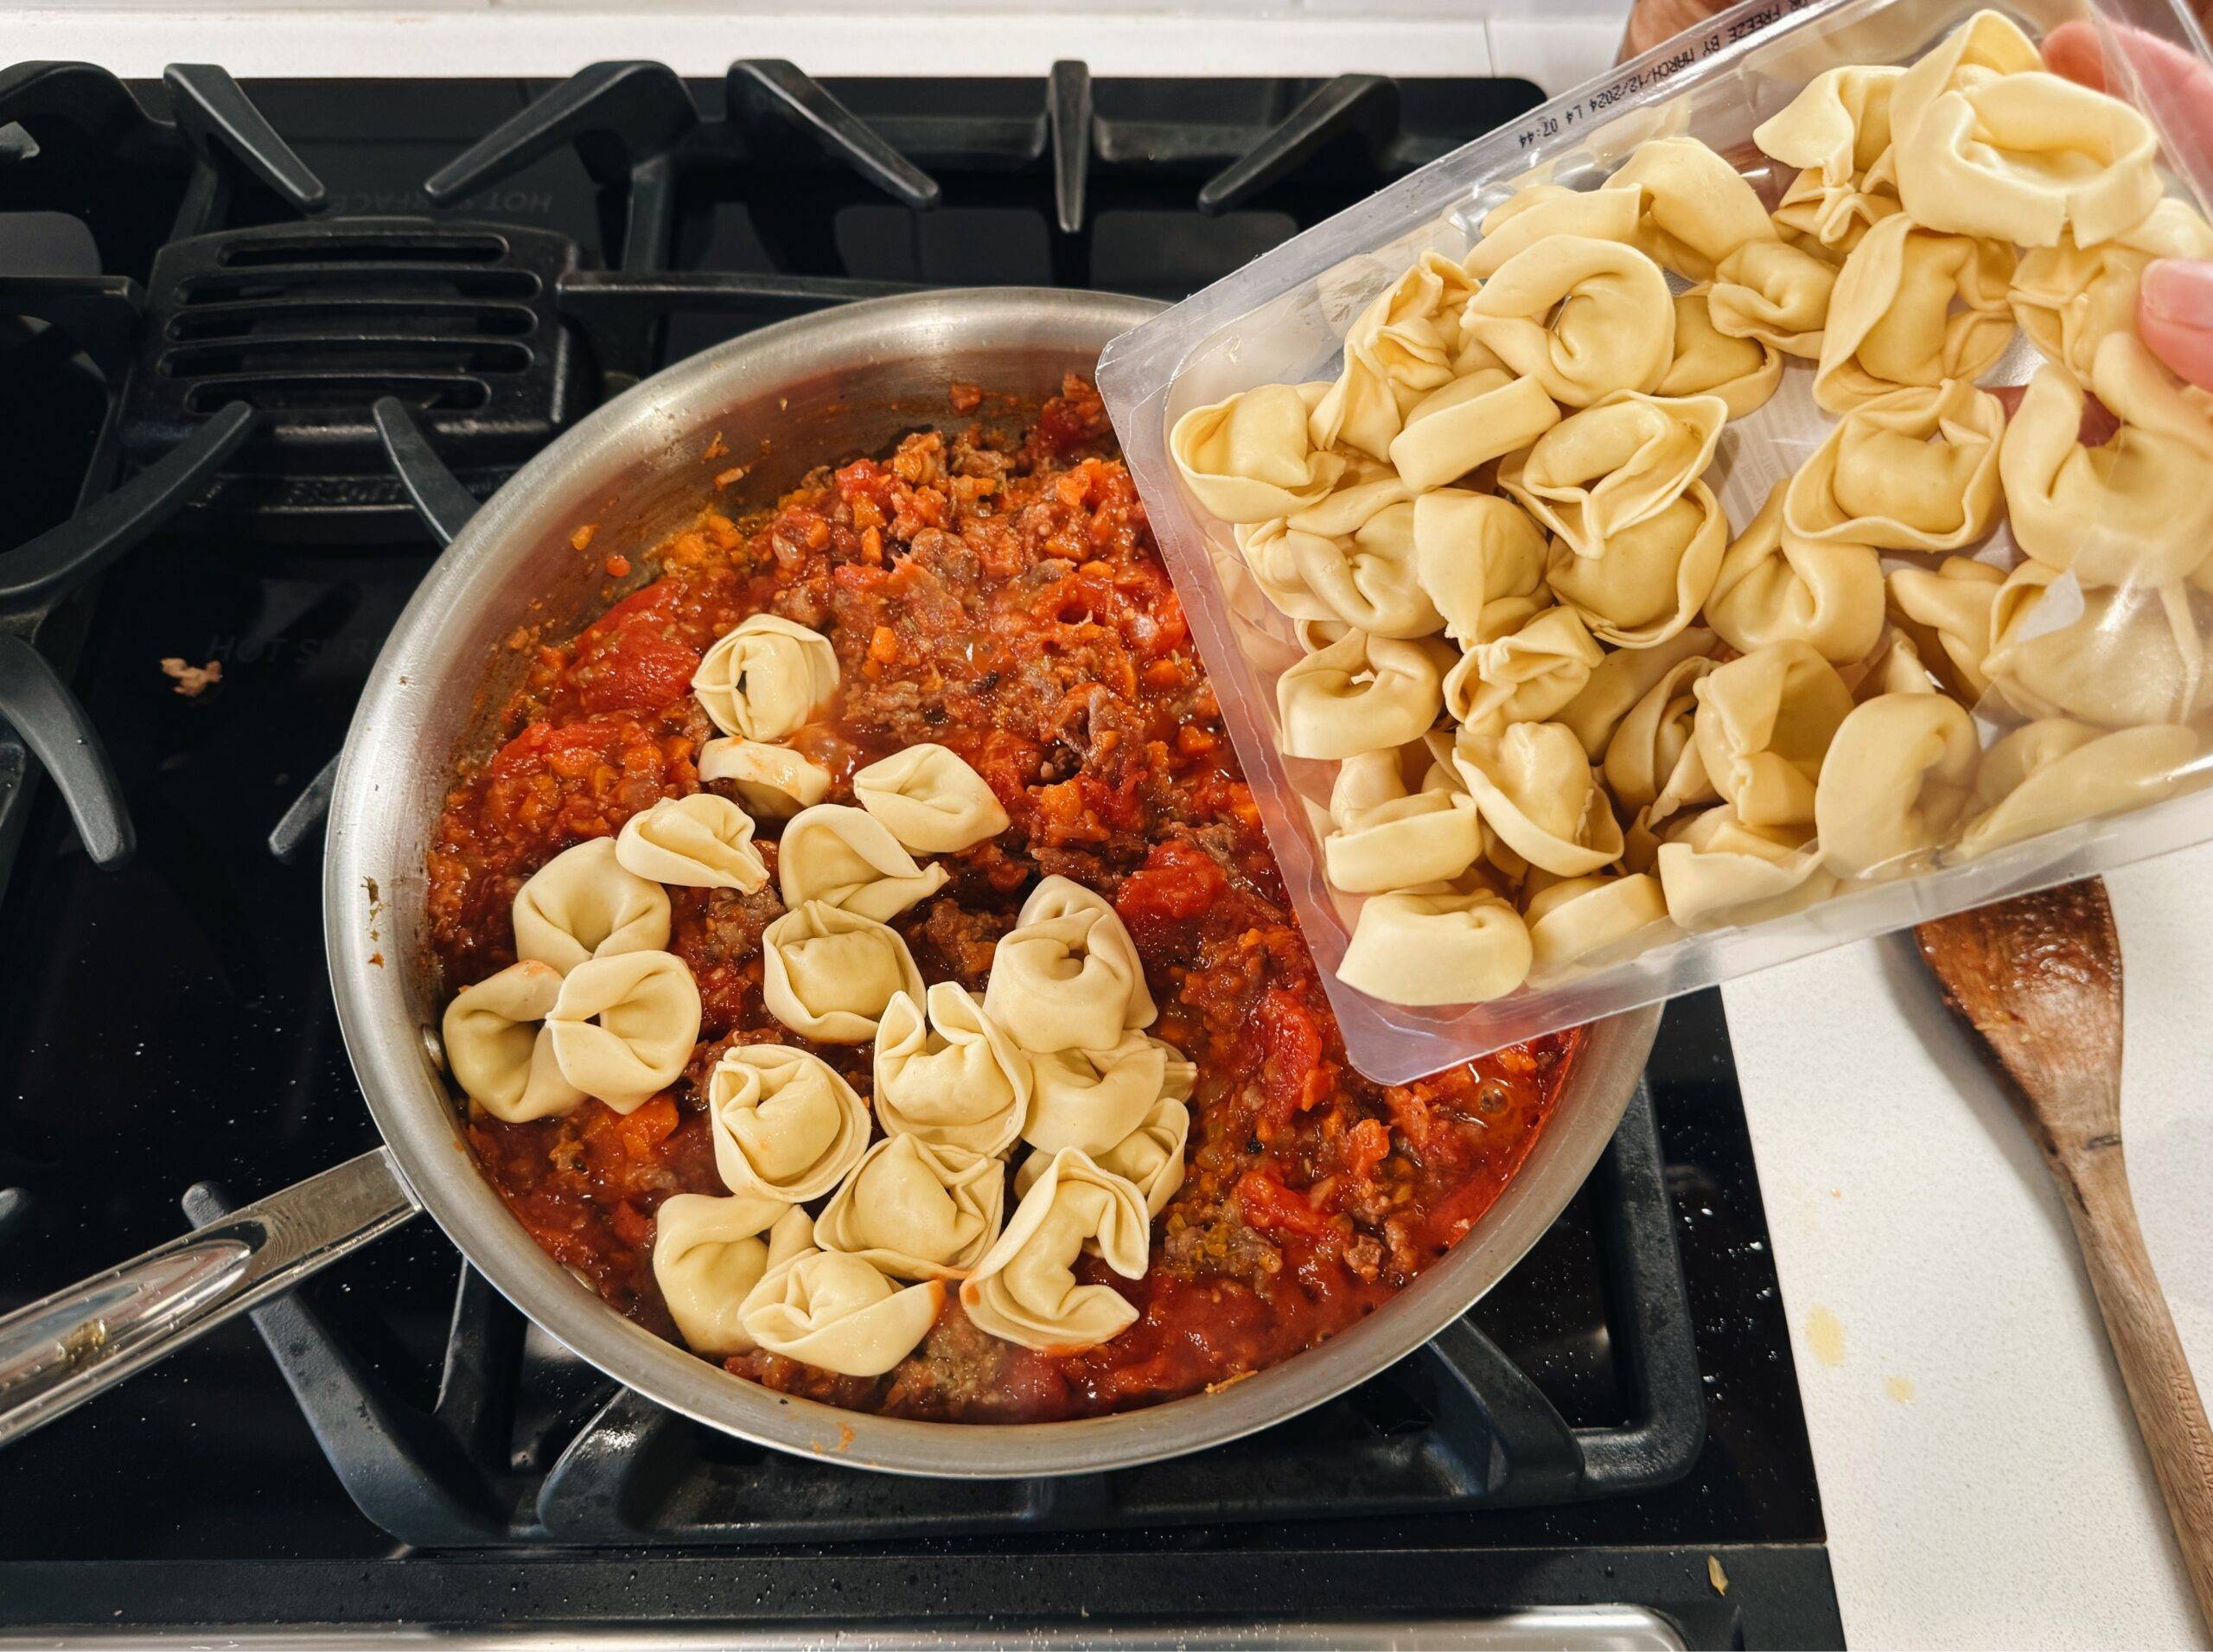 Adding tortellini and tomato sauce to the pan